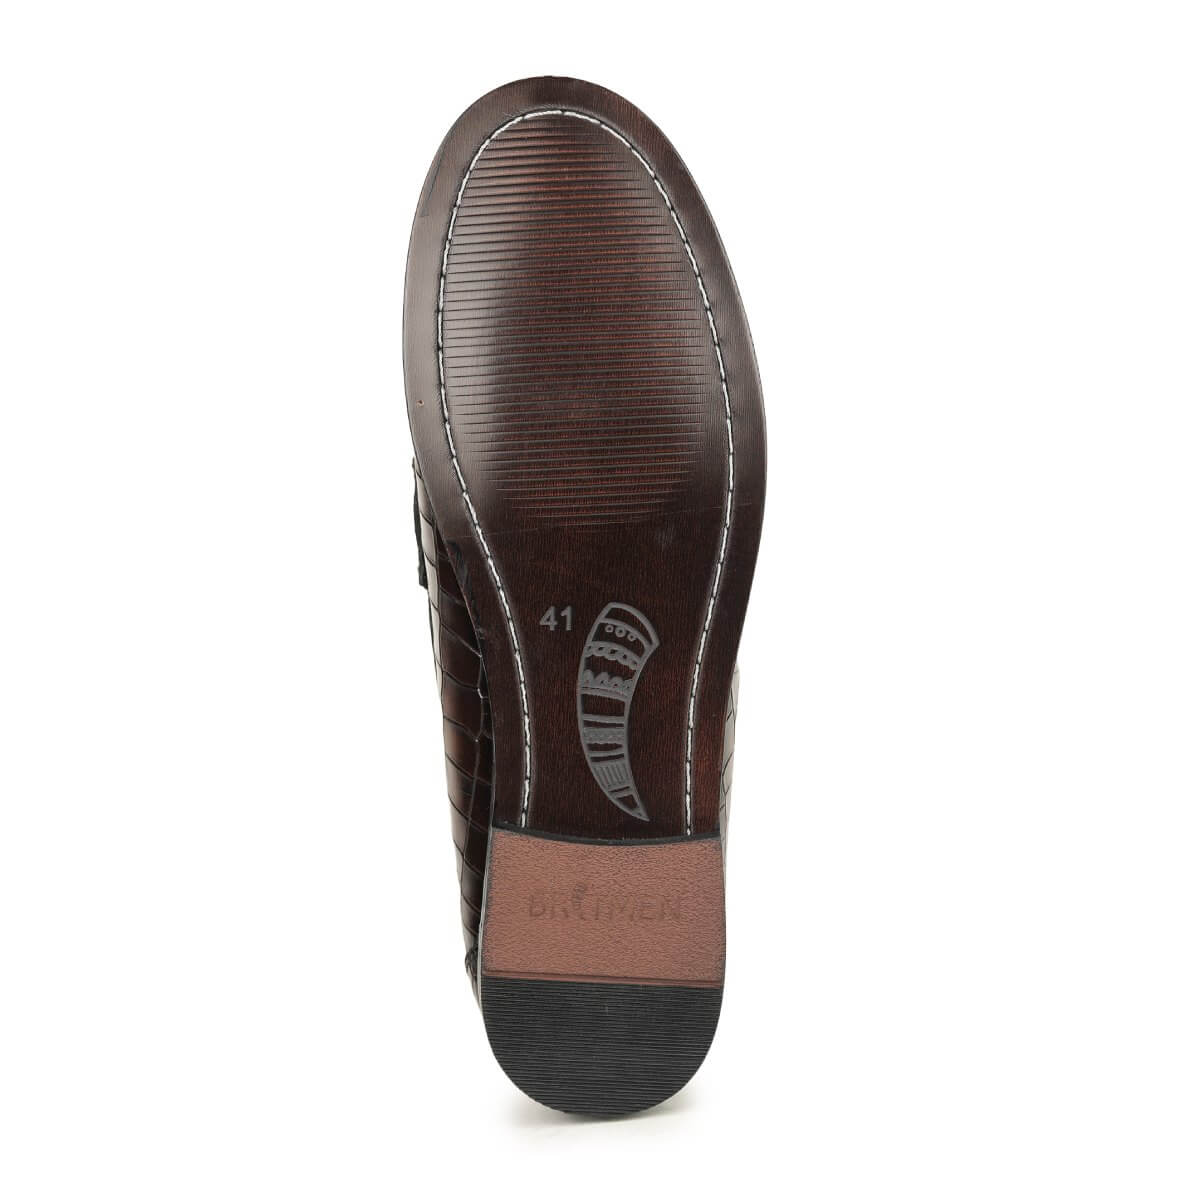 crocs loafer shoes brown_1